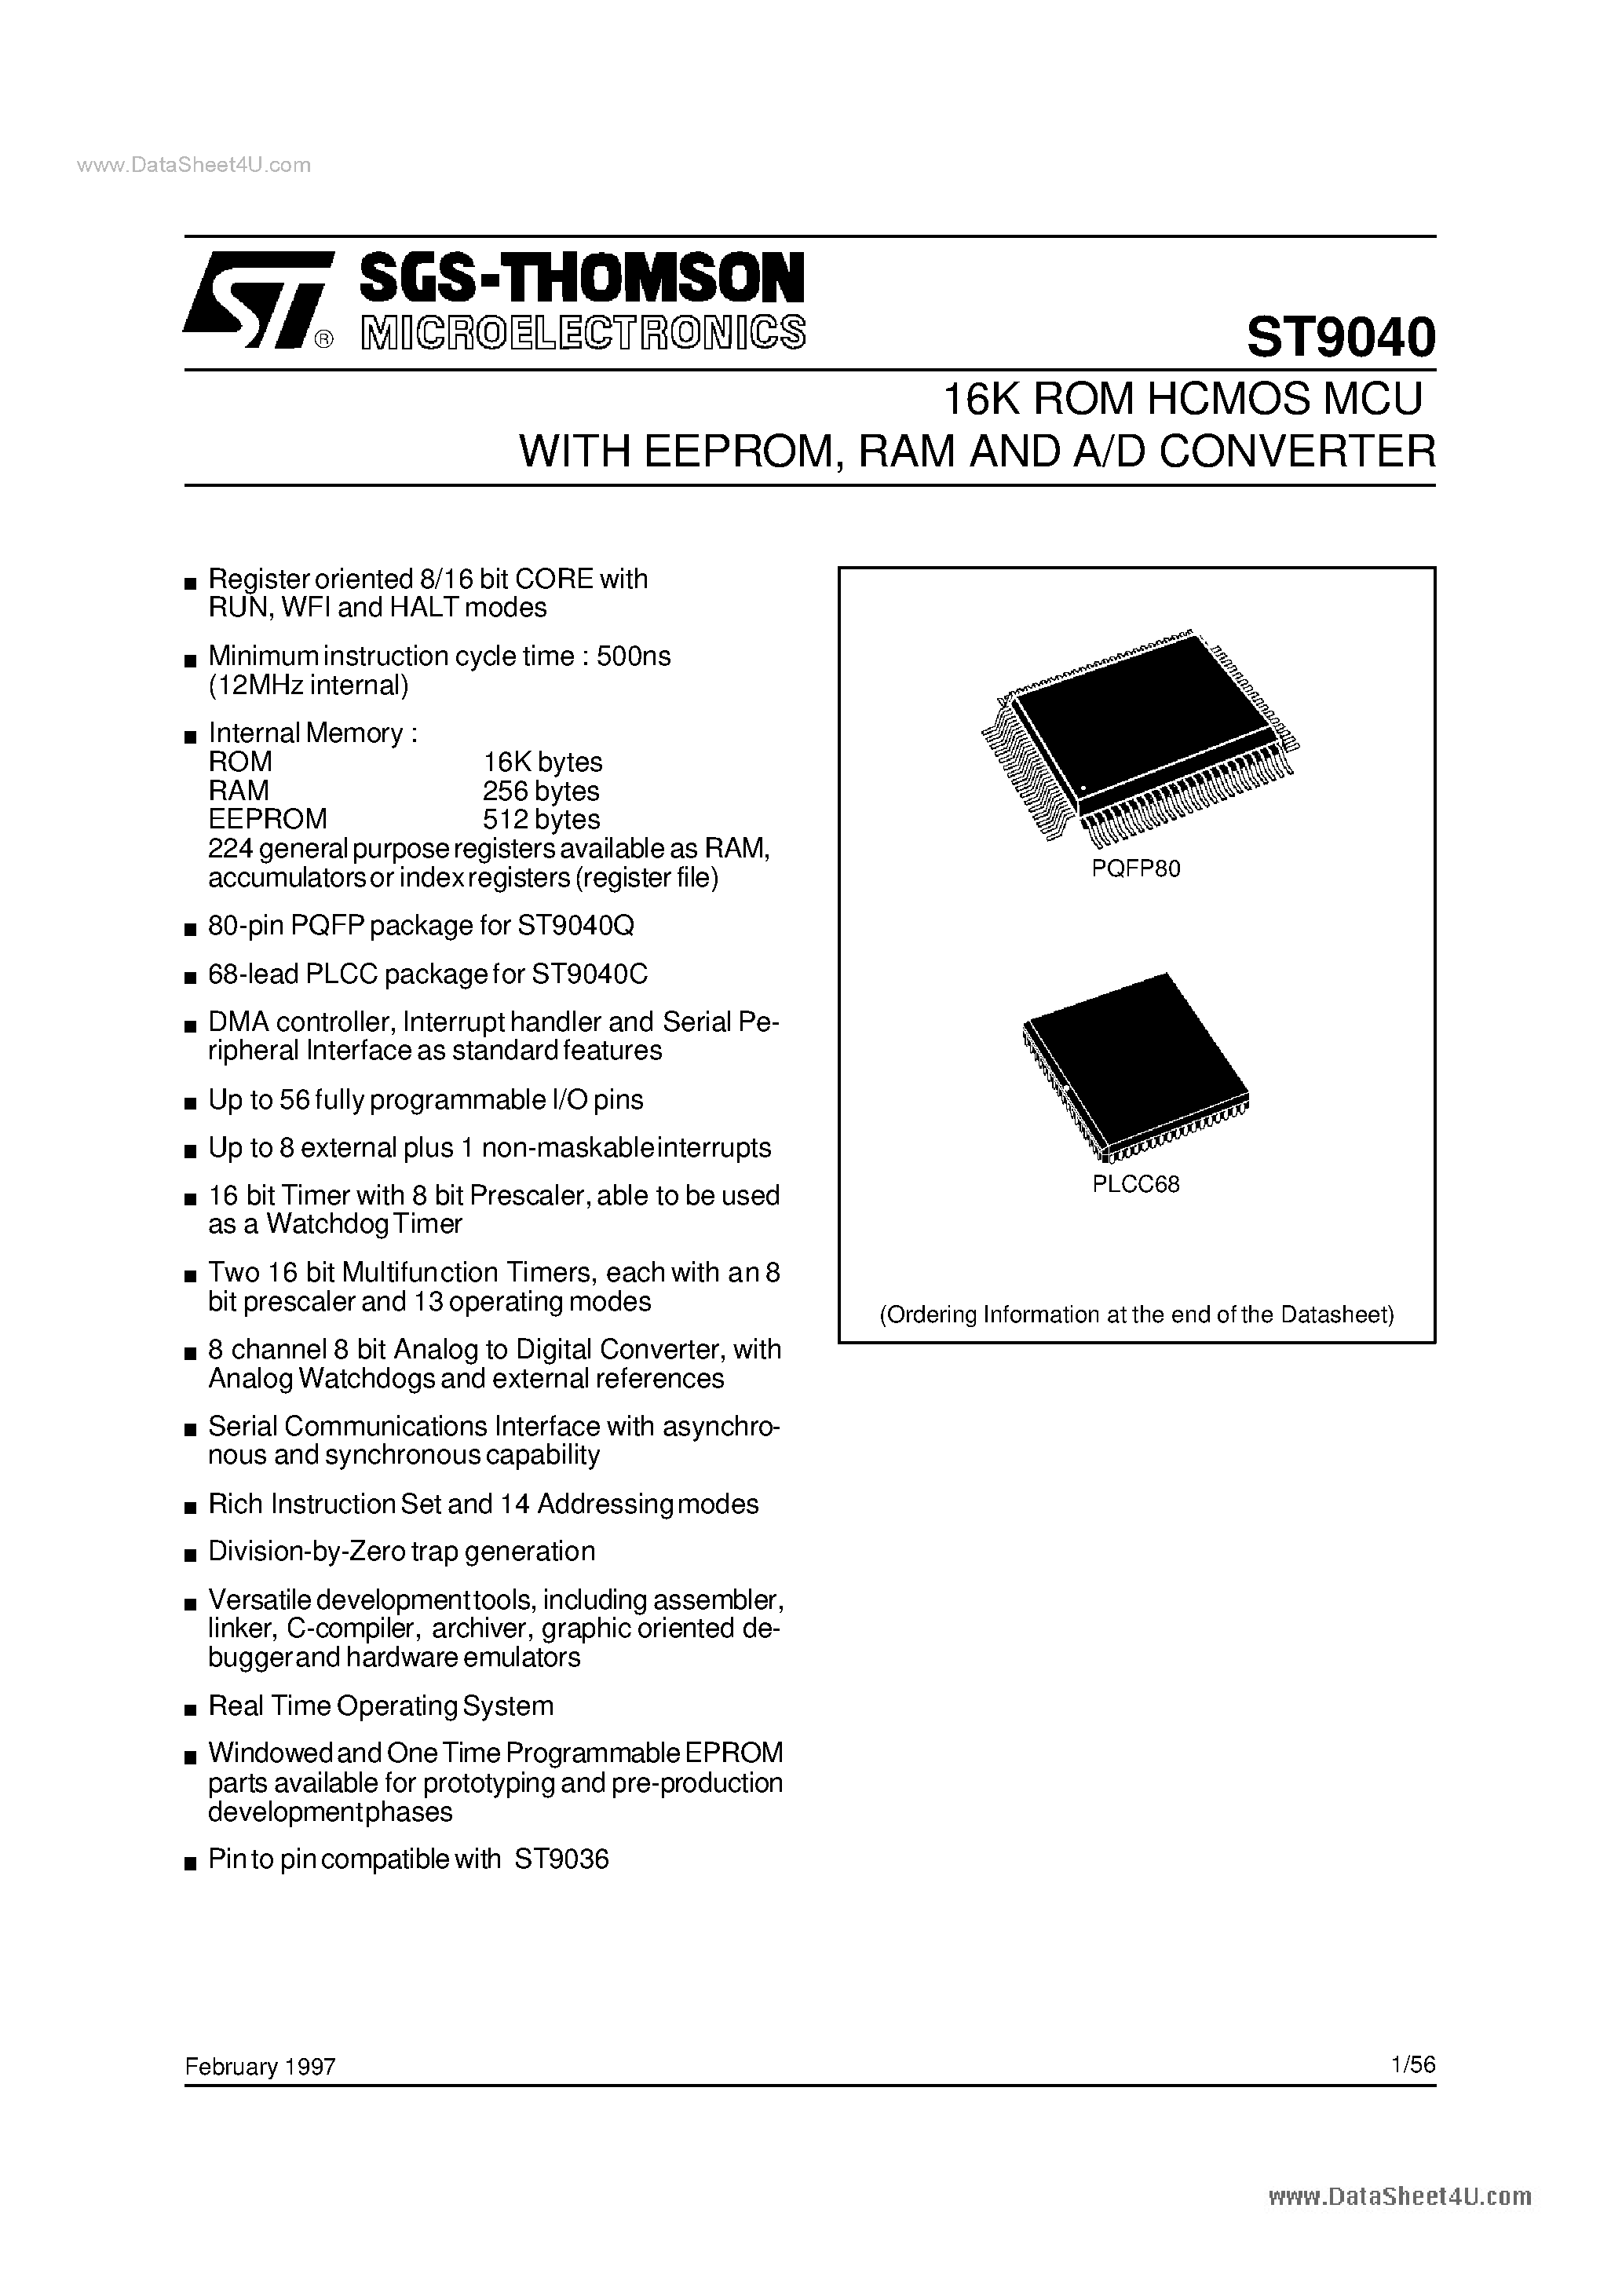 Даташит ST9040 - 16K ROM HCMOS MCU страница 1